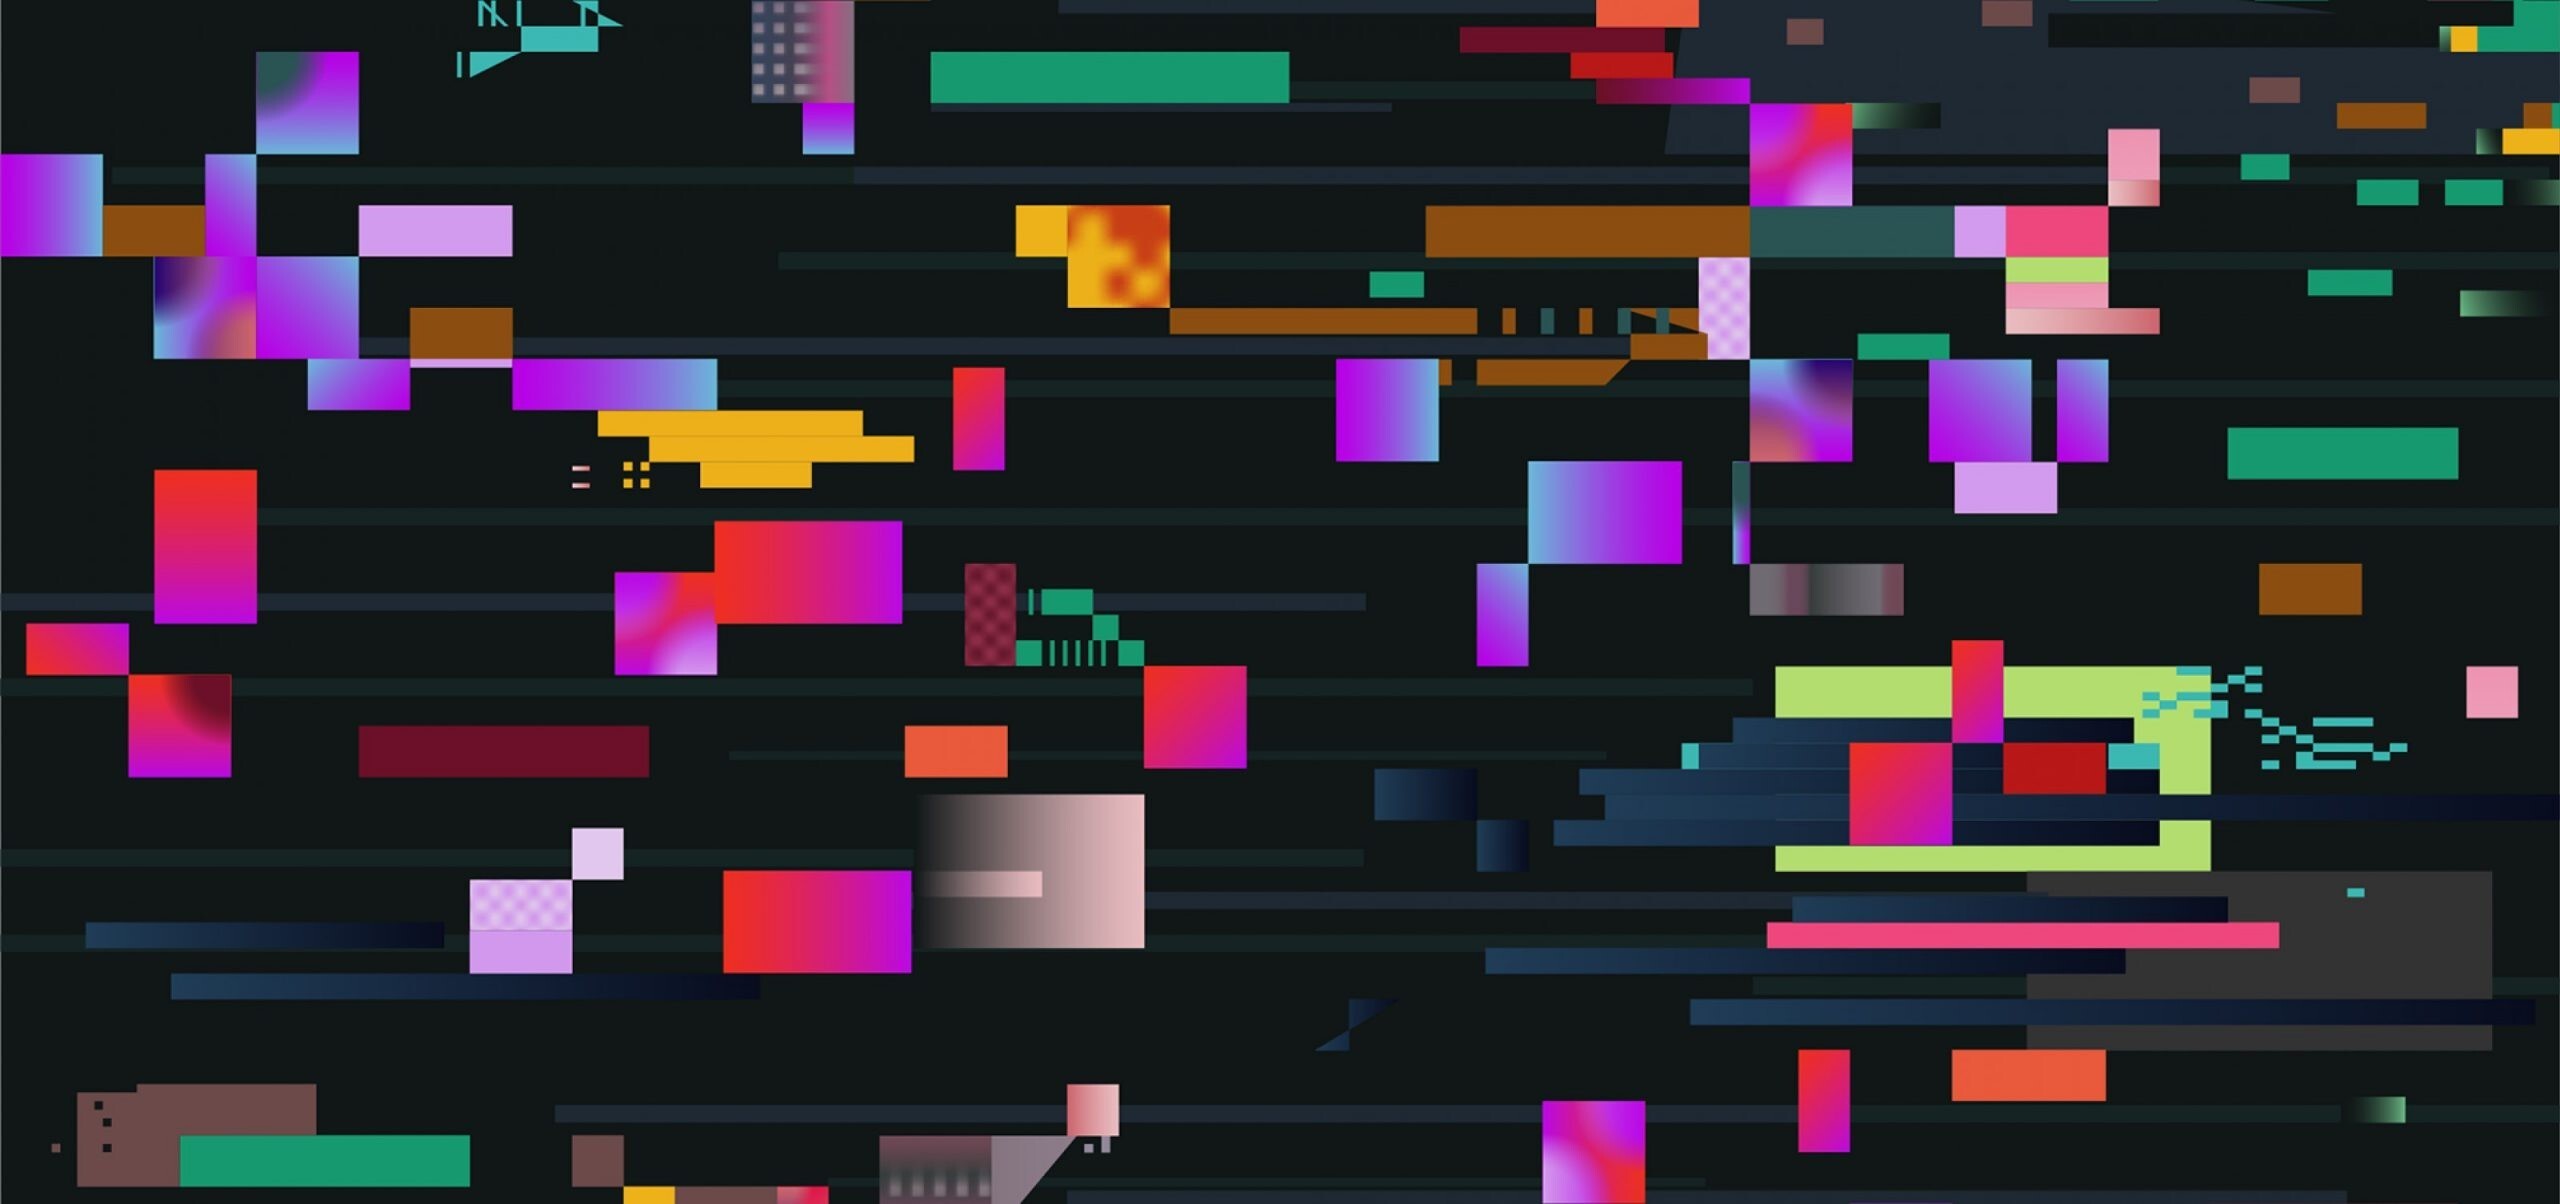 Glitch: Multicolored quadrilaterals, Squares, Rectangles, Corrupt digital data. 2560x1210 Dual Screen Wallpaper.